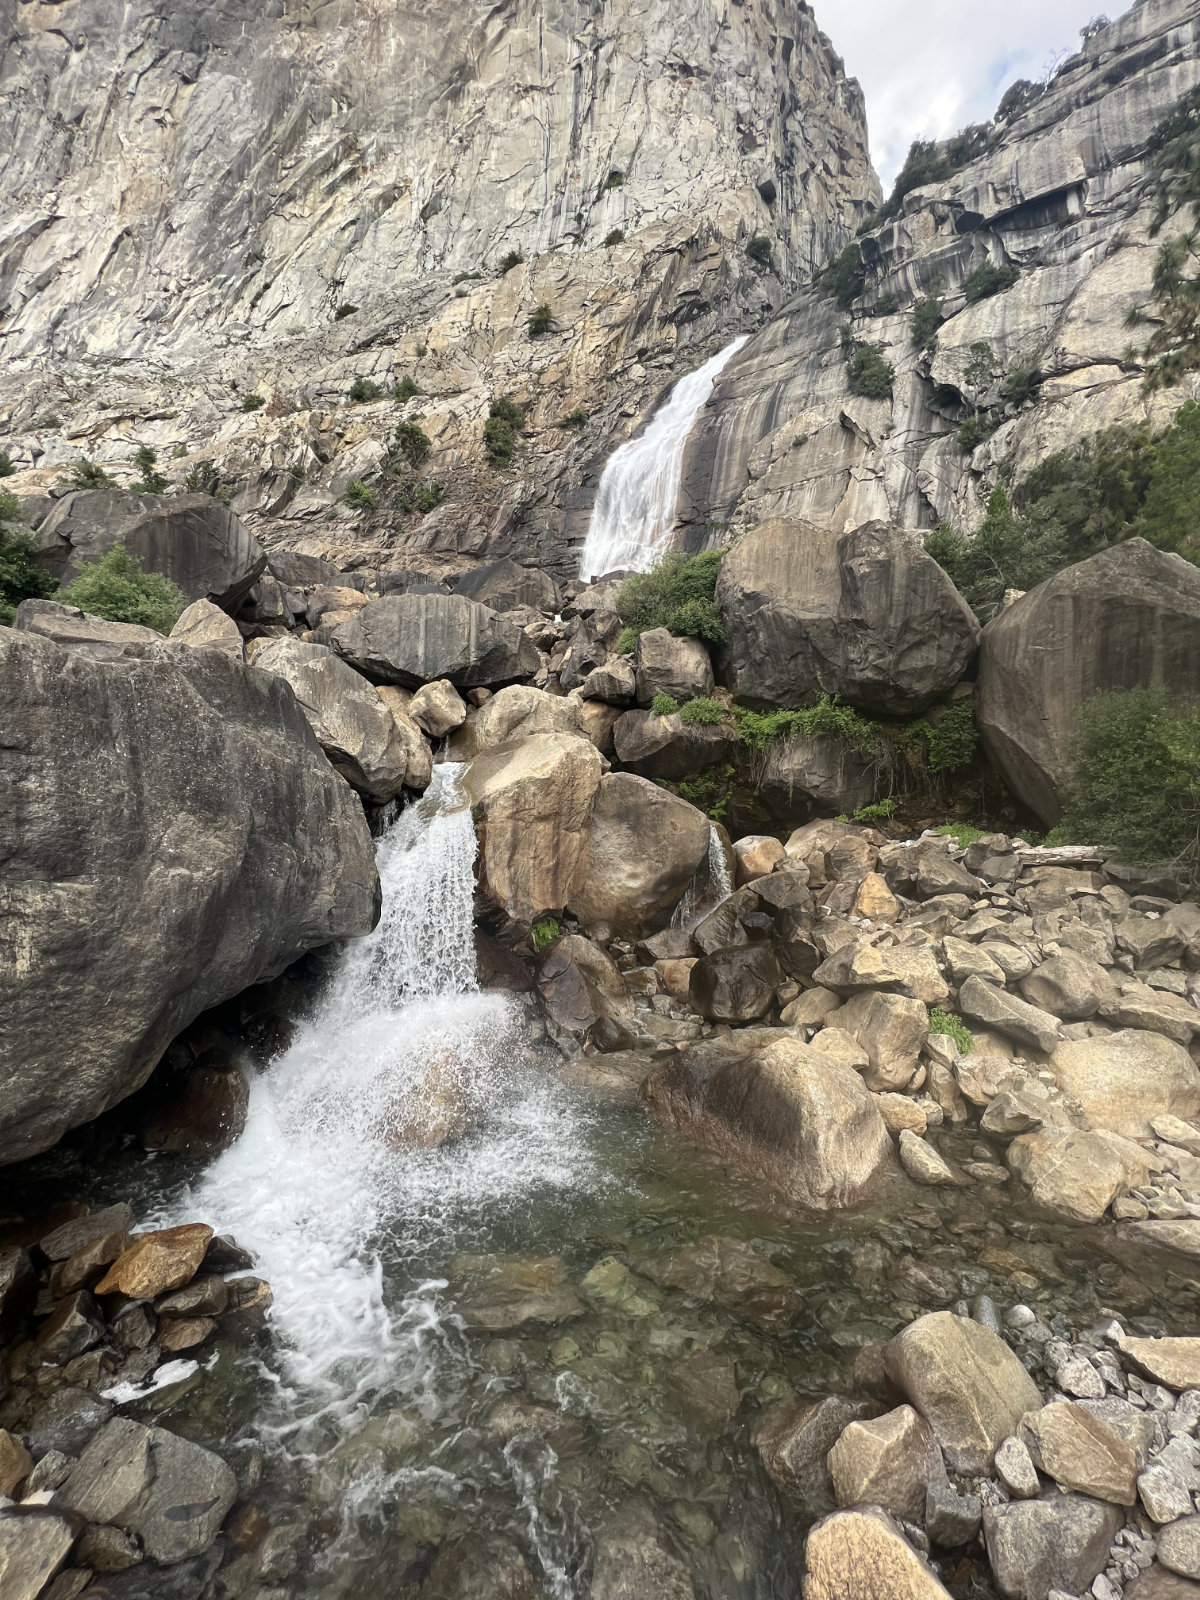 Waterfall with rocks surrounding